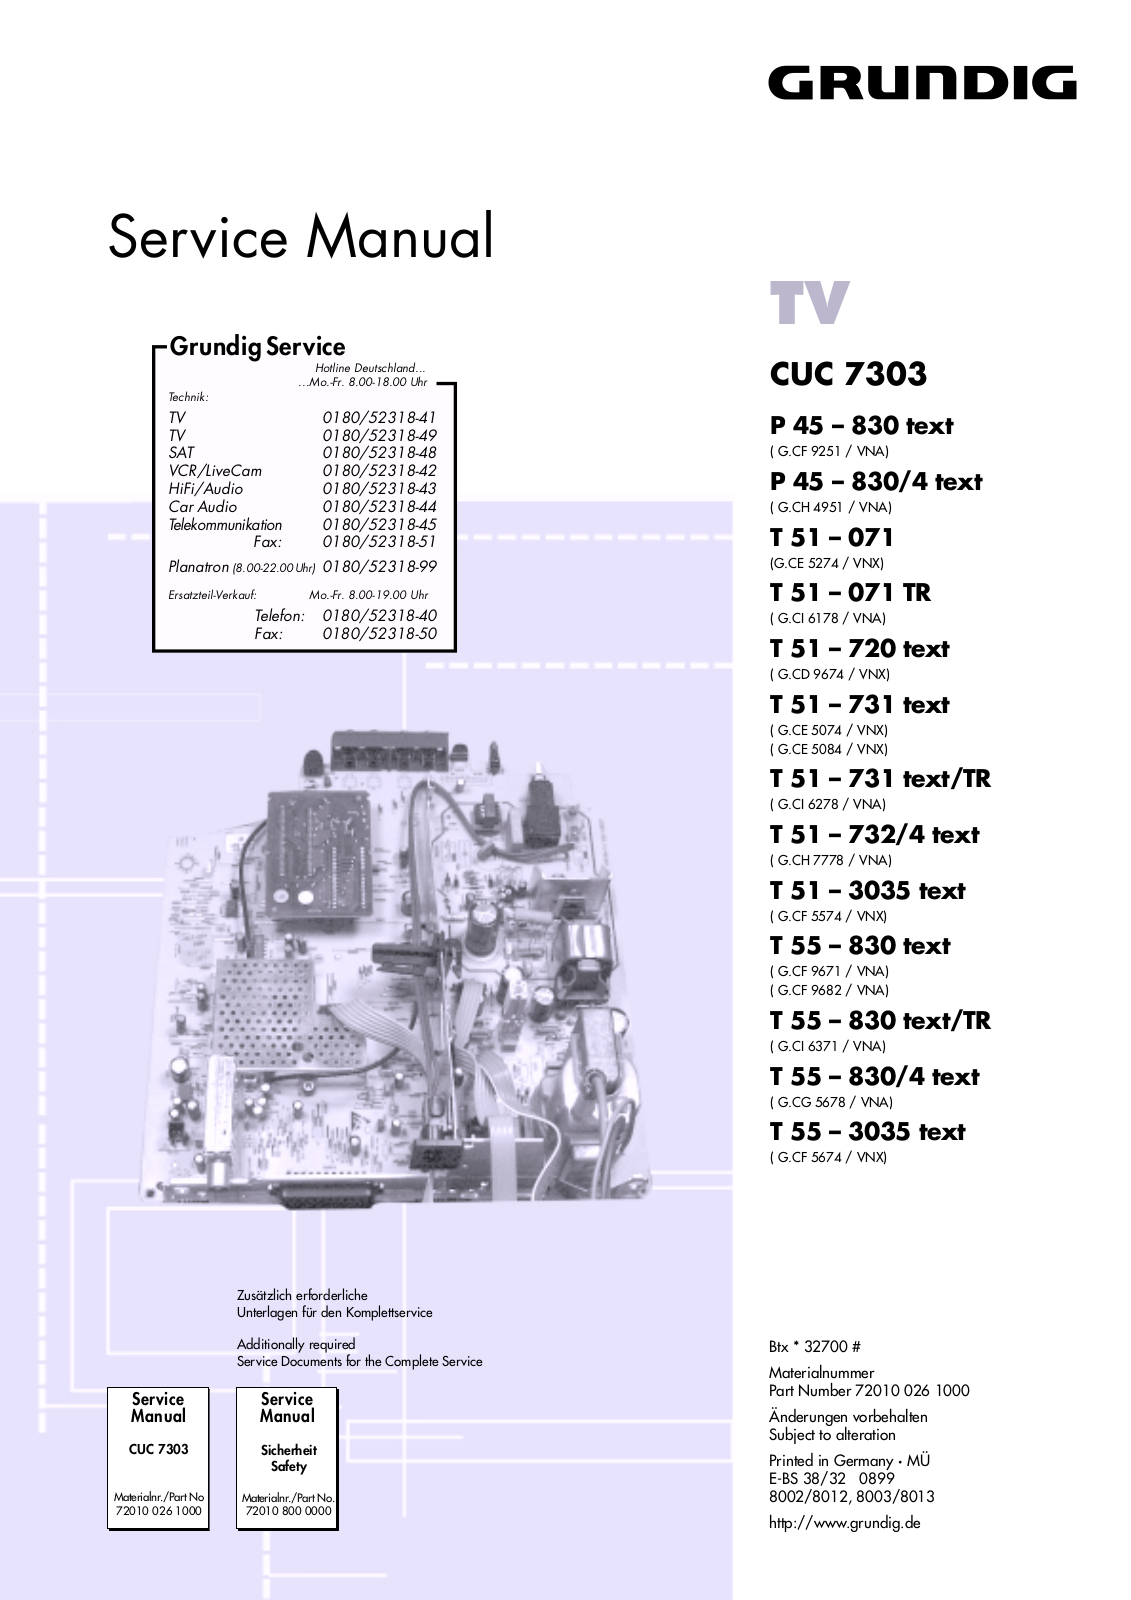 Grundig T 55 – 830, P 45 – 830-4, T 51 – 071 TR, T 51 – 731 -TR, T 51 – 732-4 Service Manual